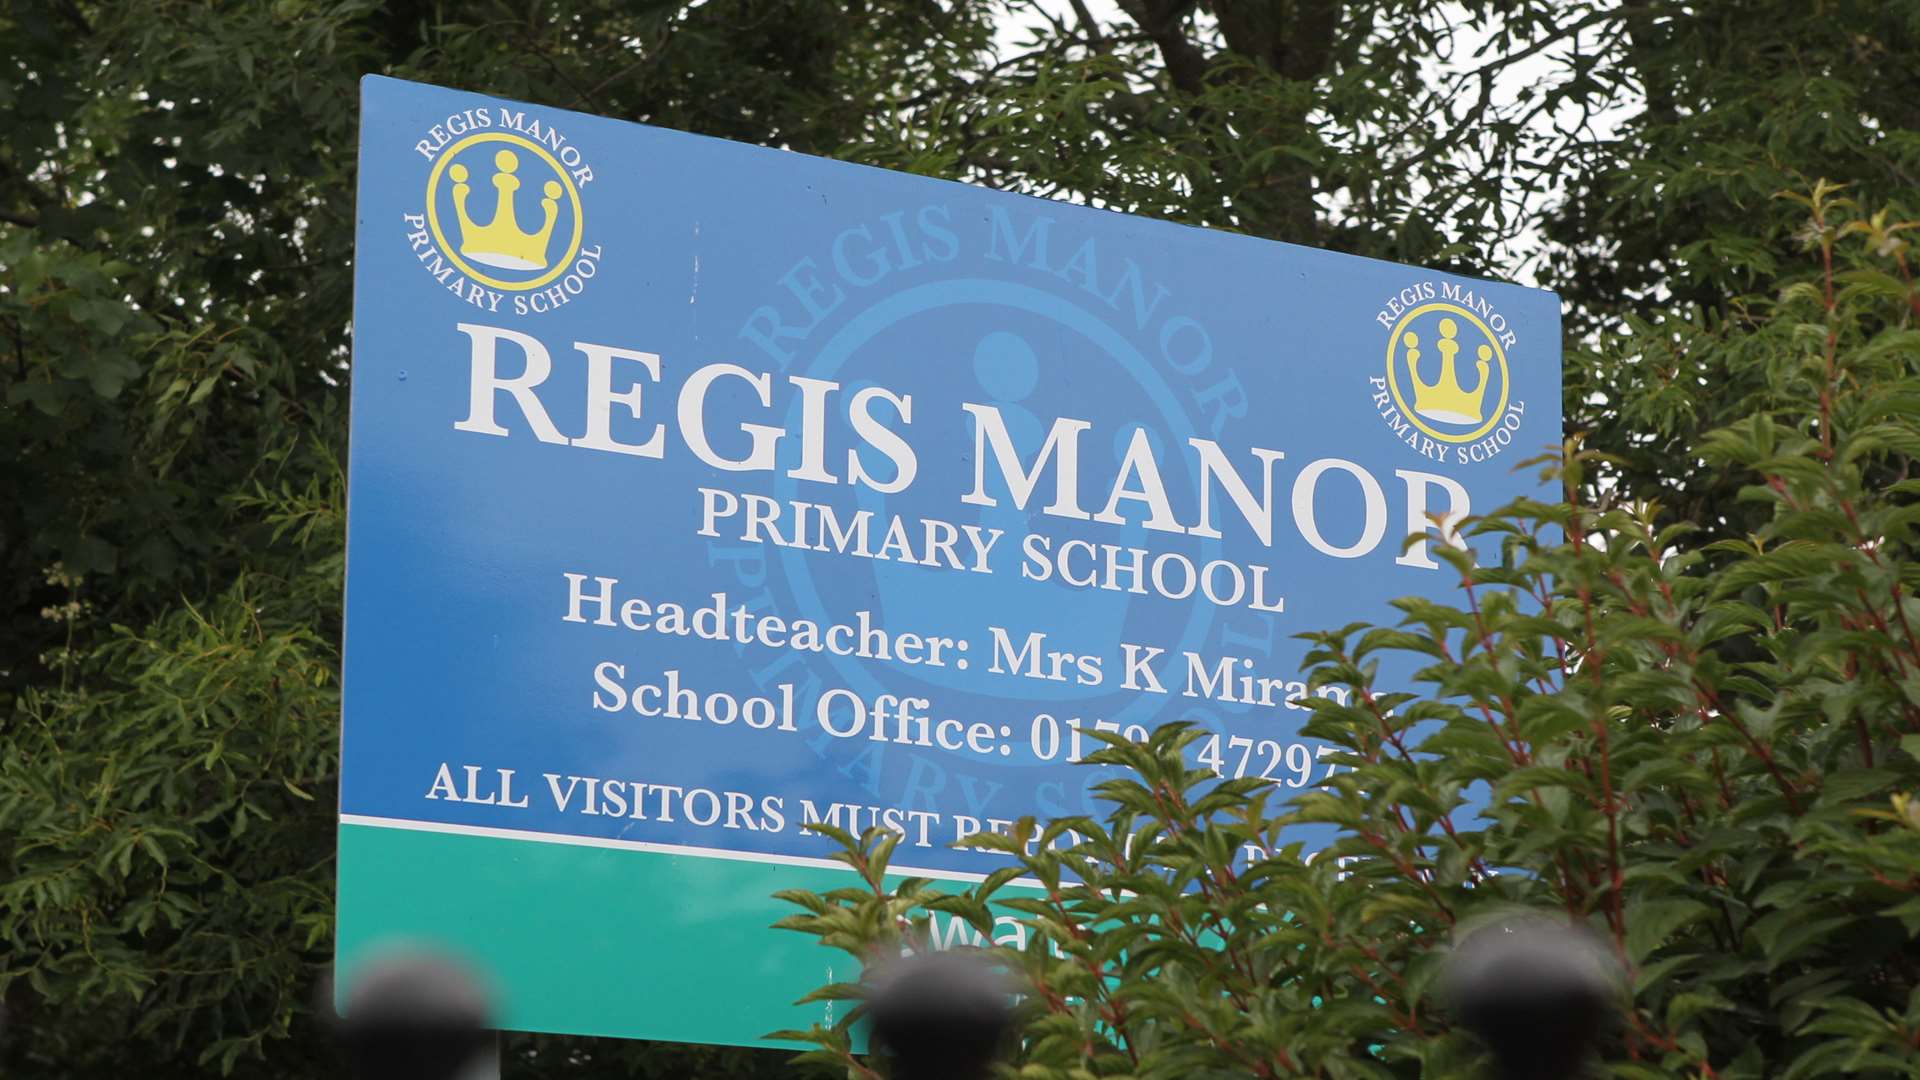 Regis Manor Primary School